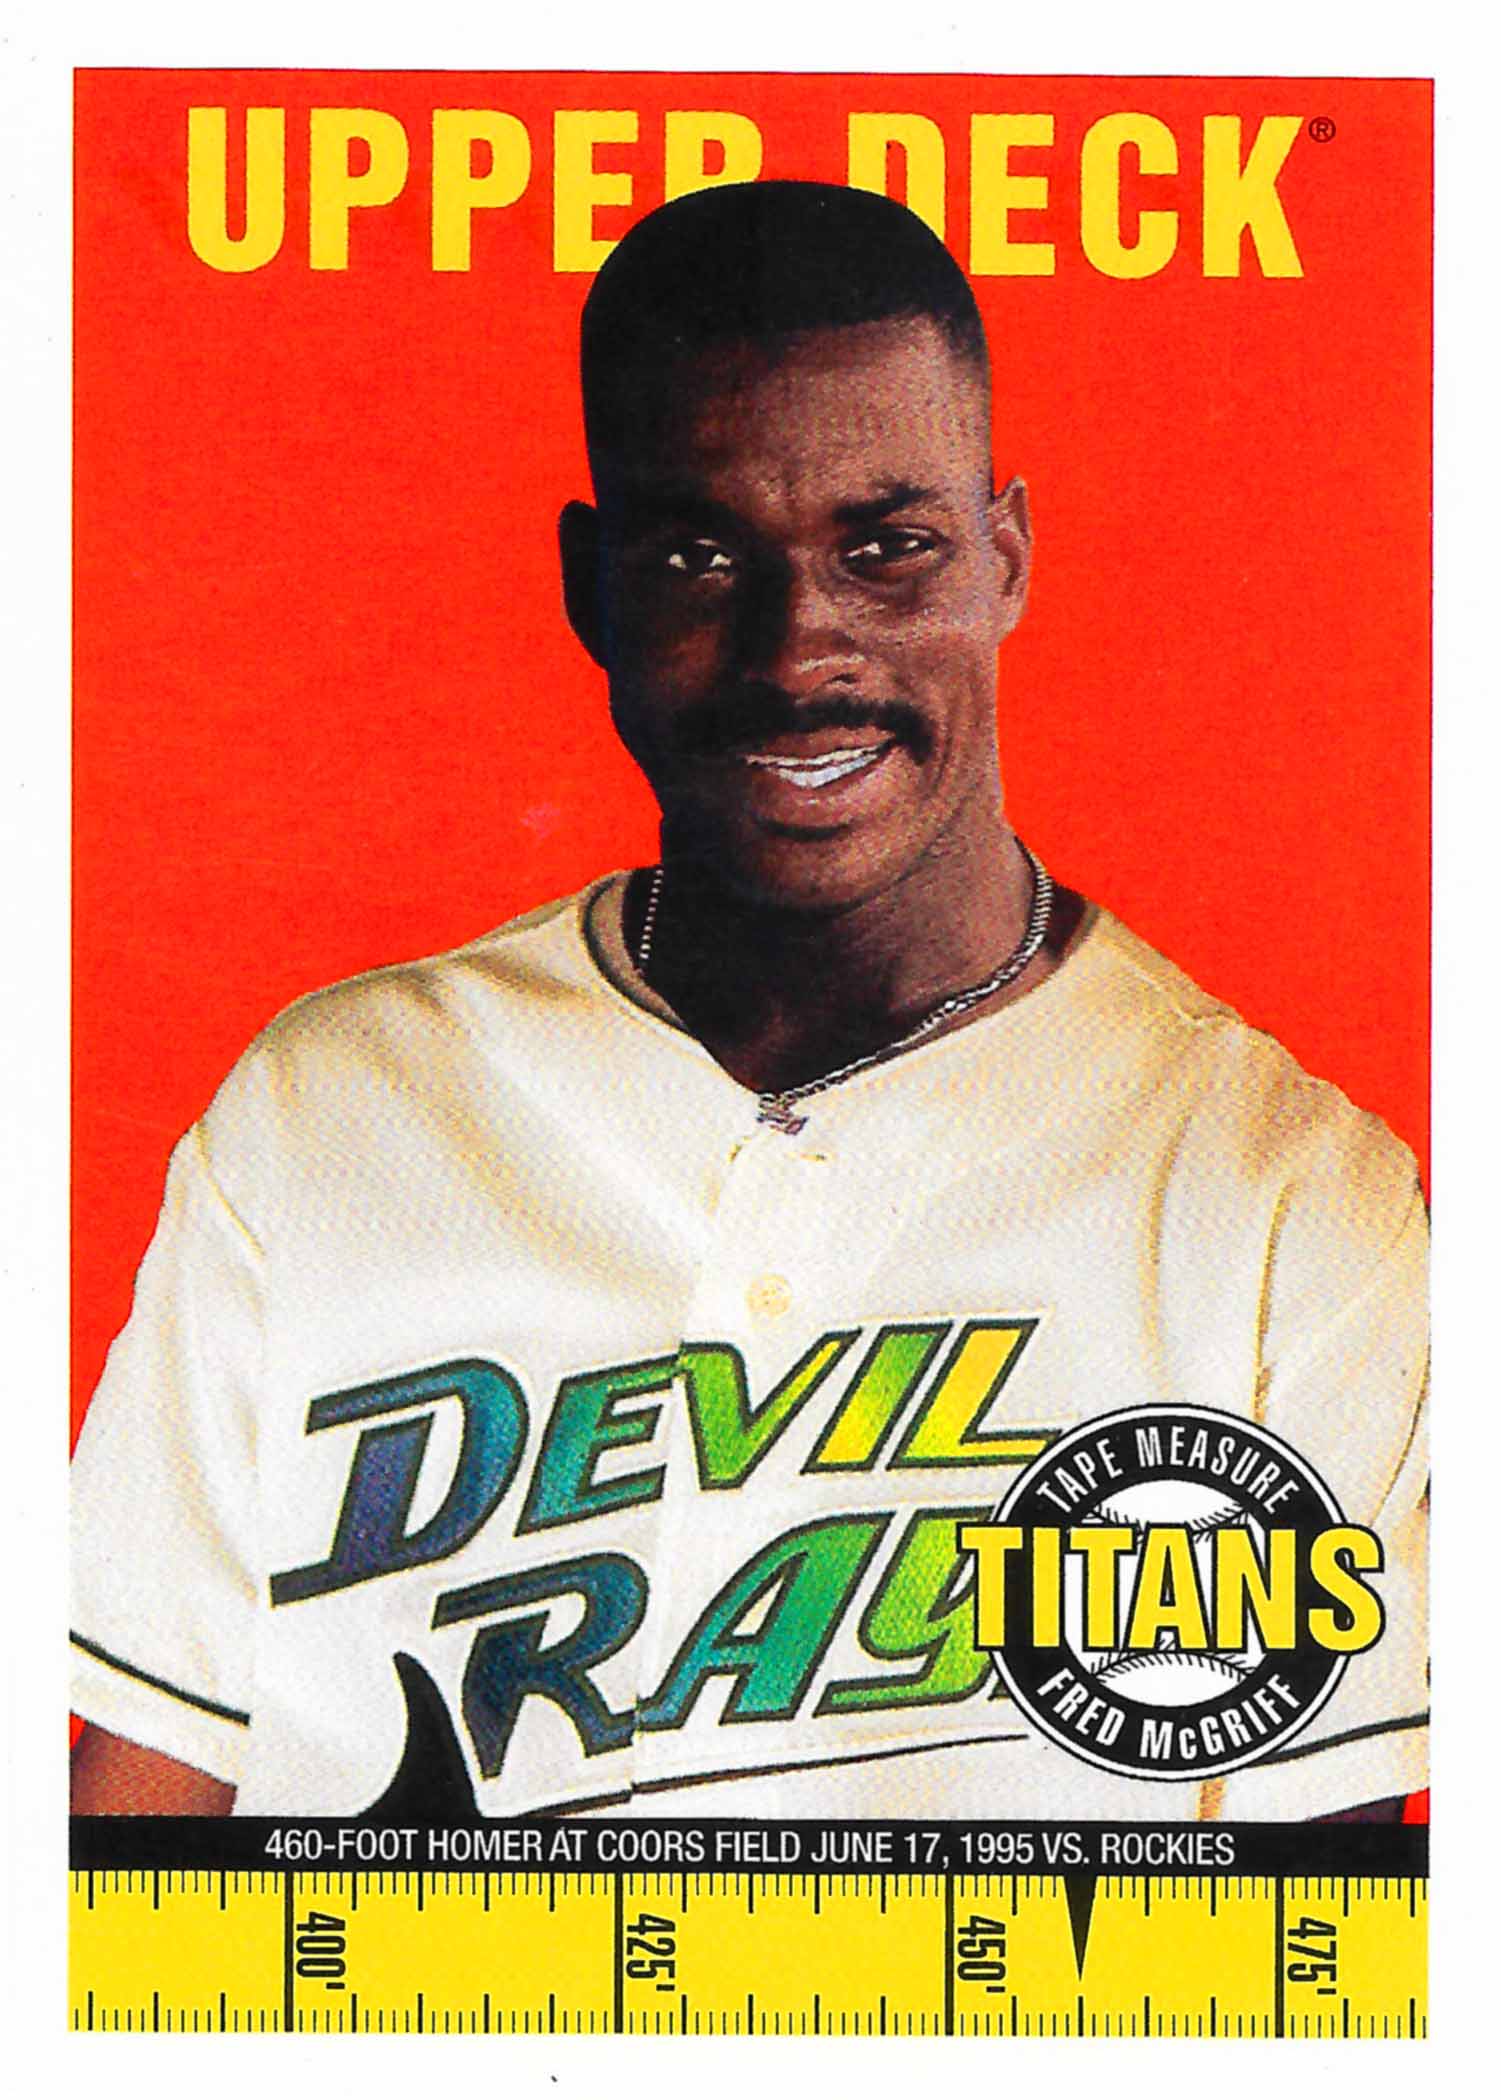 2004 Donruss Studio 188 Fred McGriff Tampa Bay Devil Rays Baseball Card